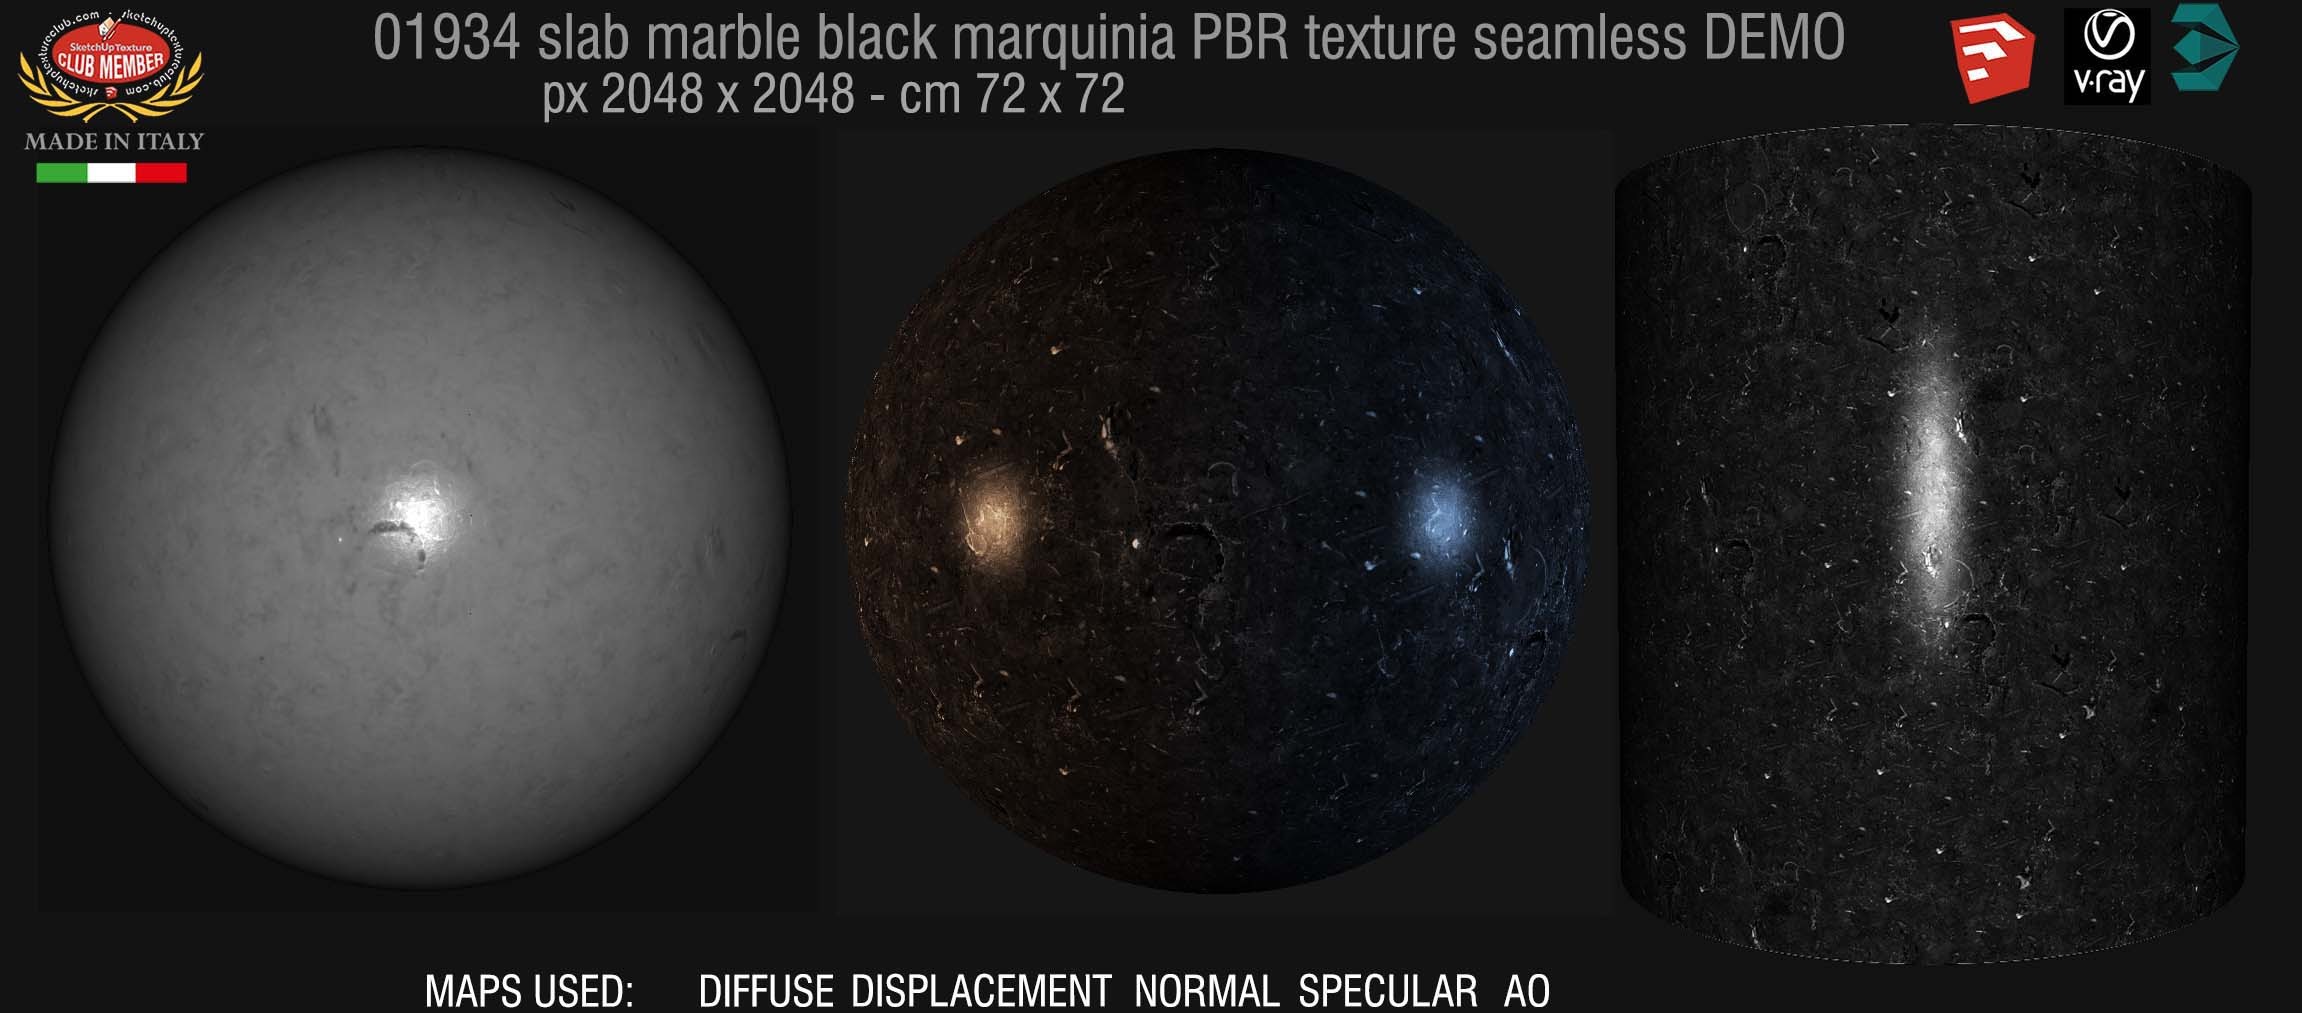 01934 Slab marble black marquinia PBR texture seamless DEMO